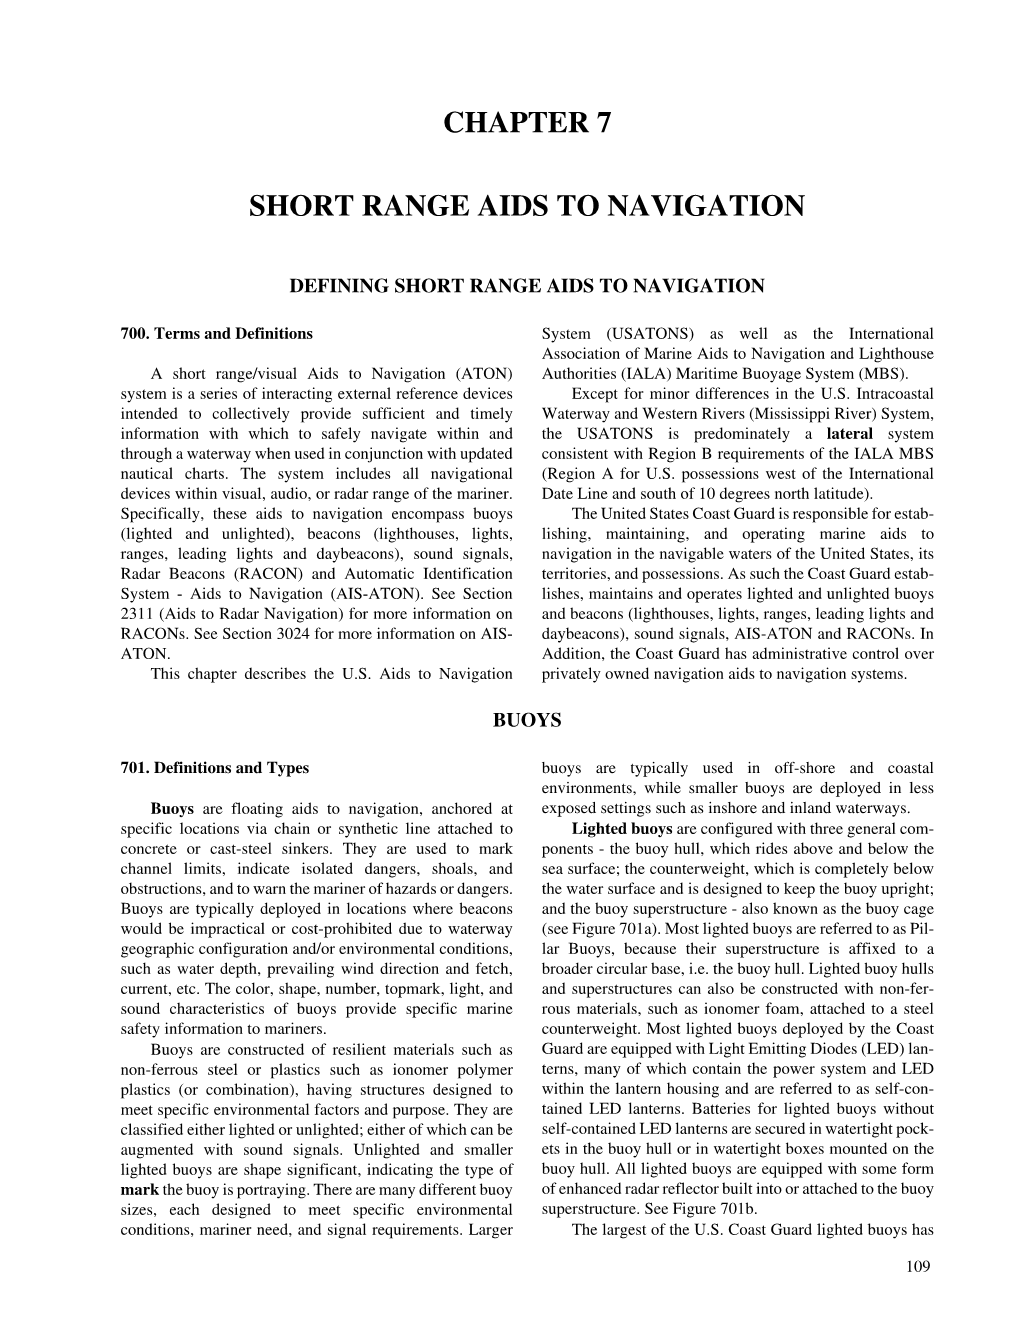 Chapter 7 Short Range Aids to Navigation